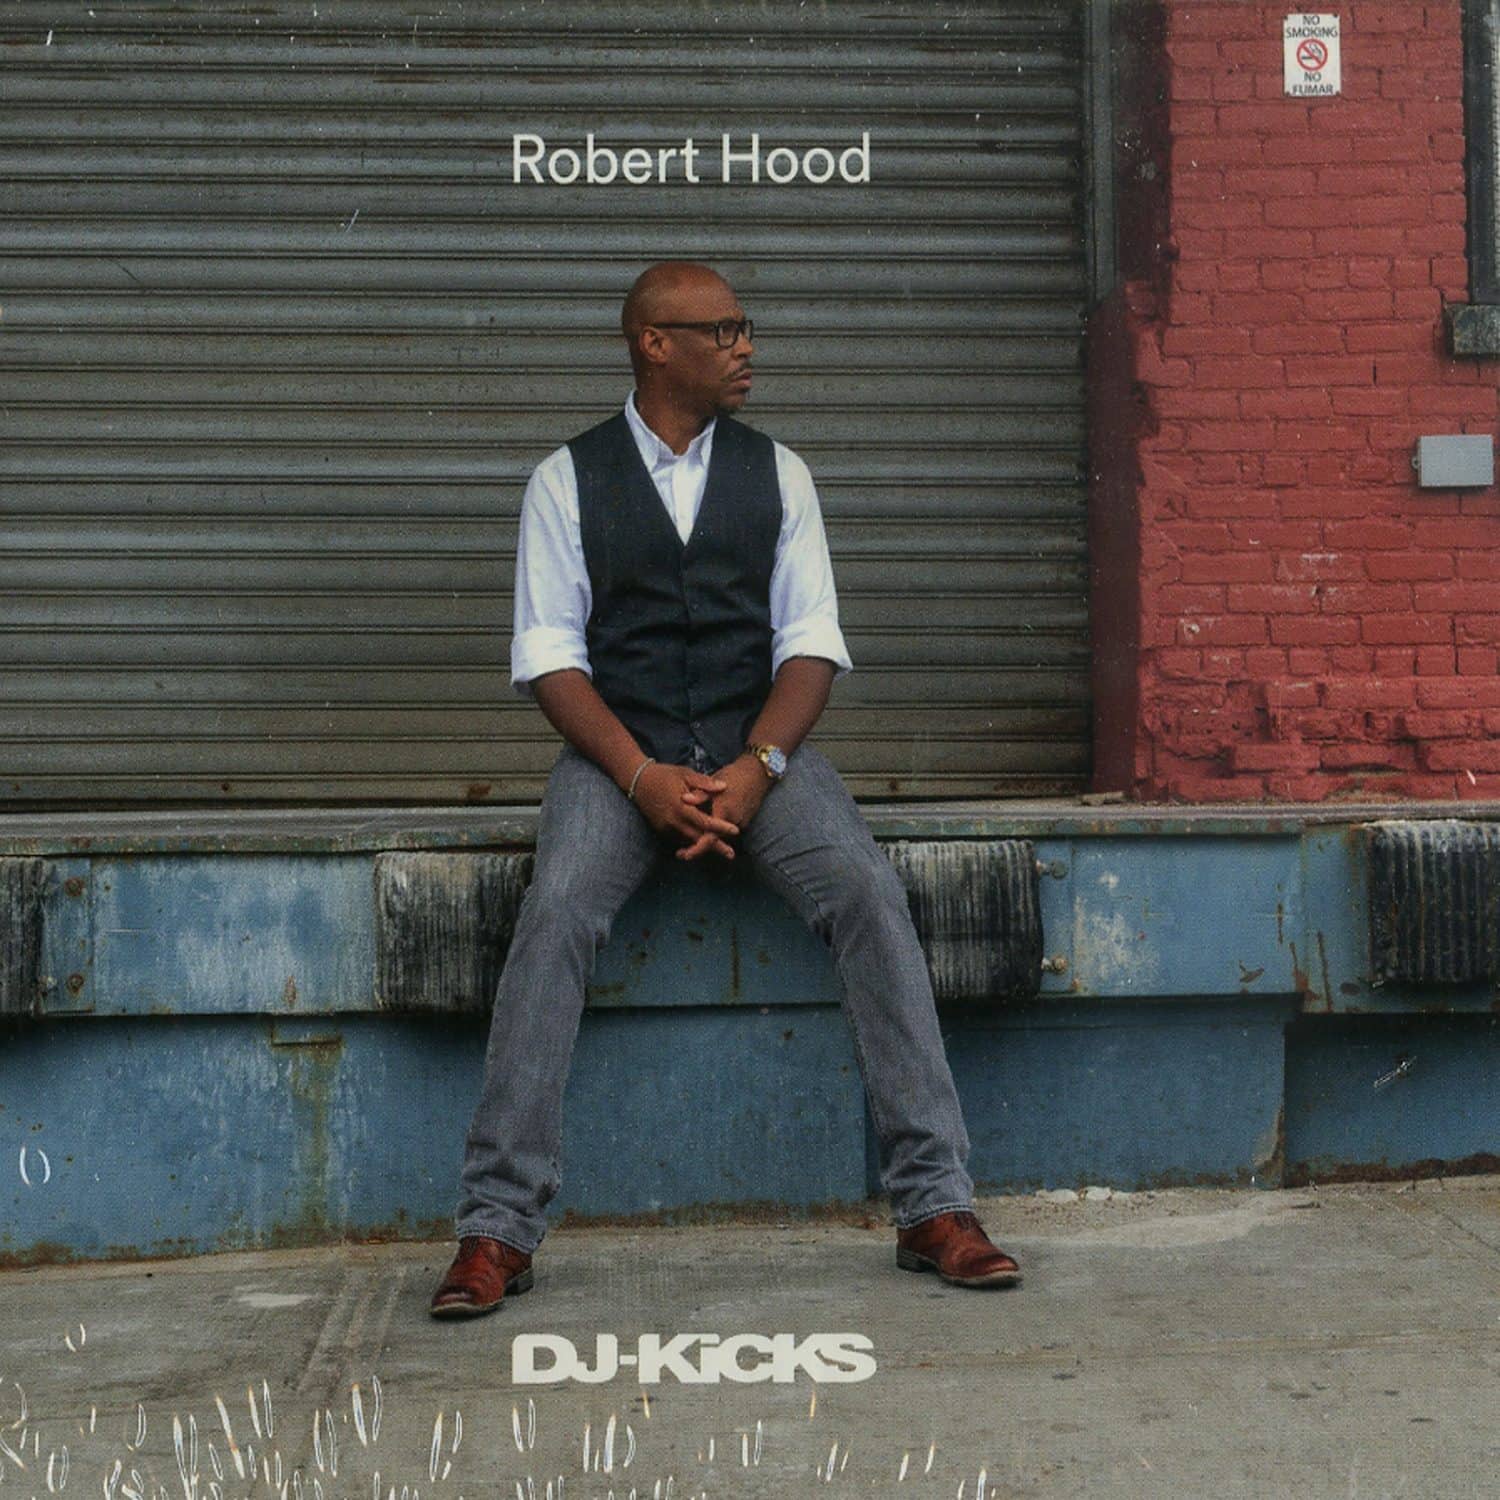 Robert Hood - DJ-KICKS 